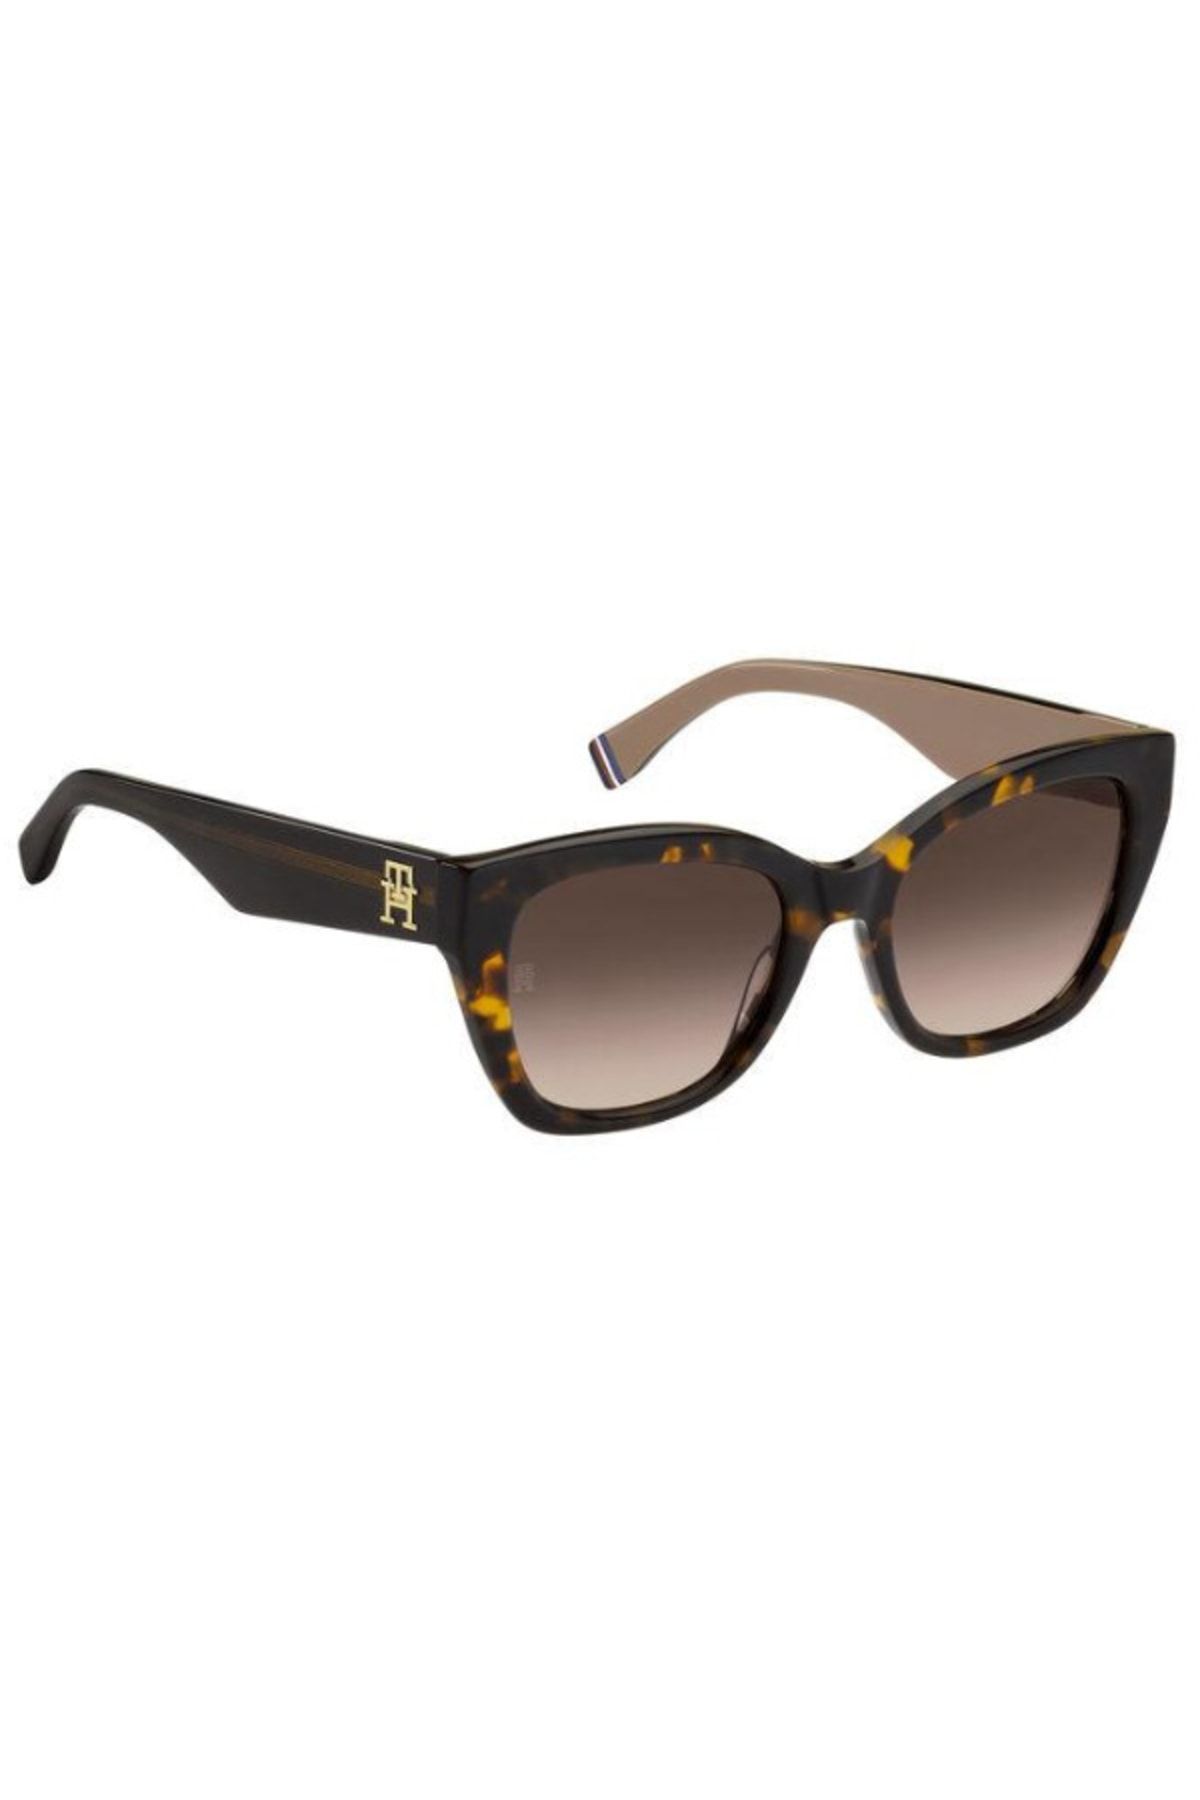 Tommy Hilfiger Sunglasses Th 1980/s